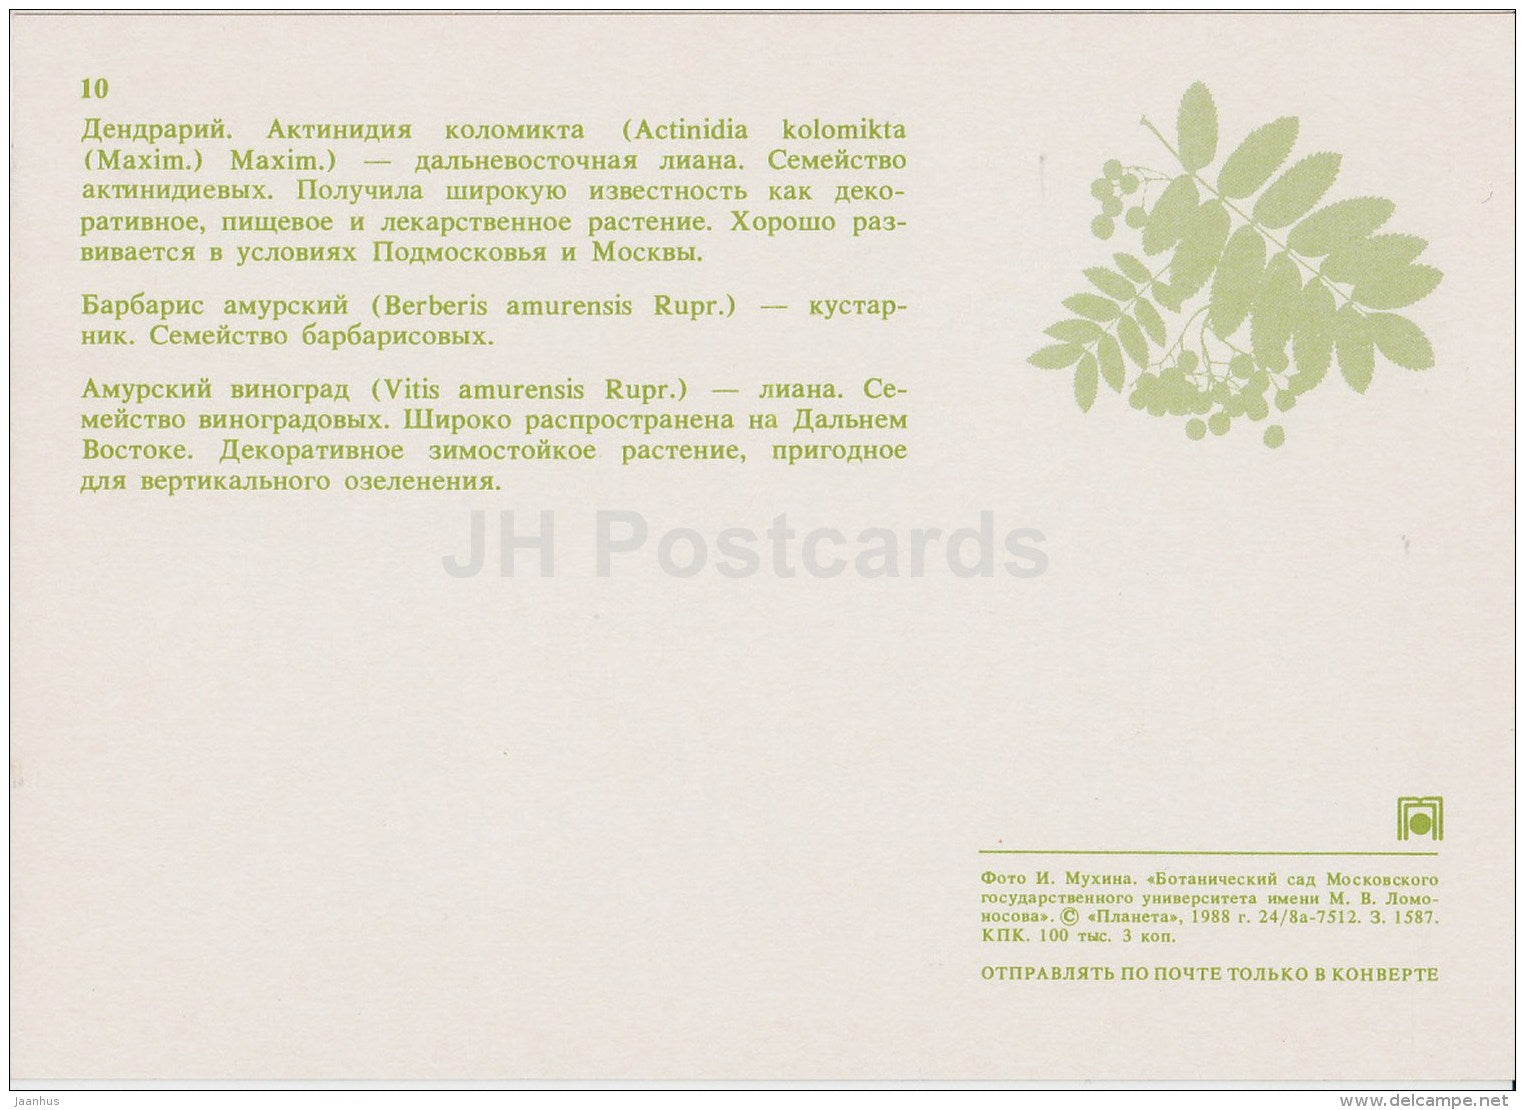 Actinidia kolomikta - Berberis amurensis - Amur Grape - Moscow Botanical Garden - 1988 - Russia USSR - unused - JH Postcards